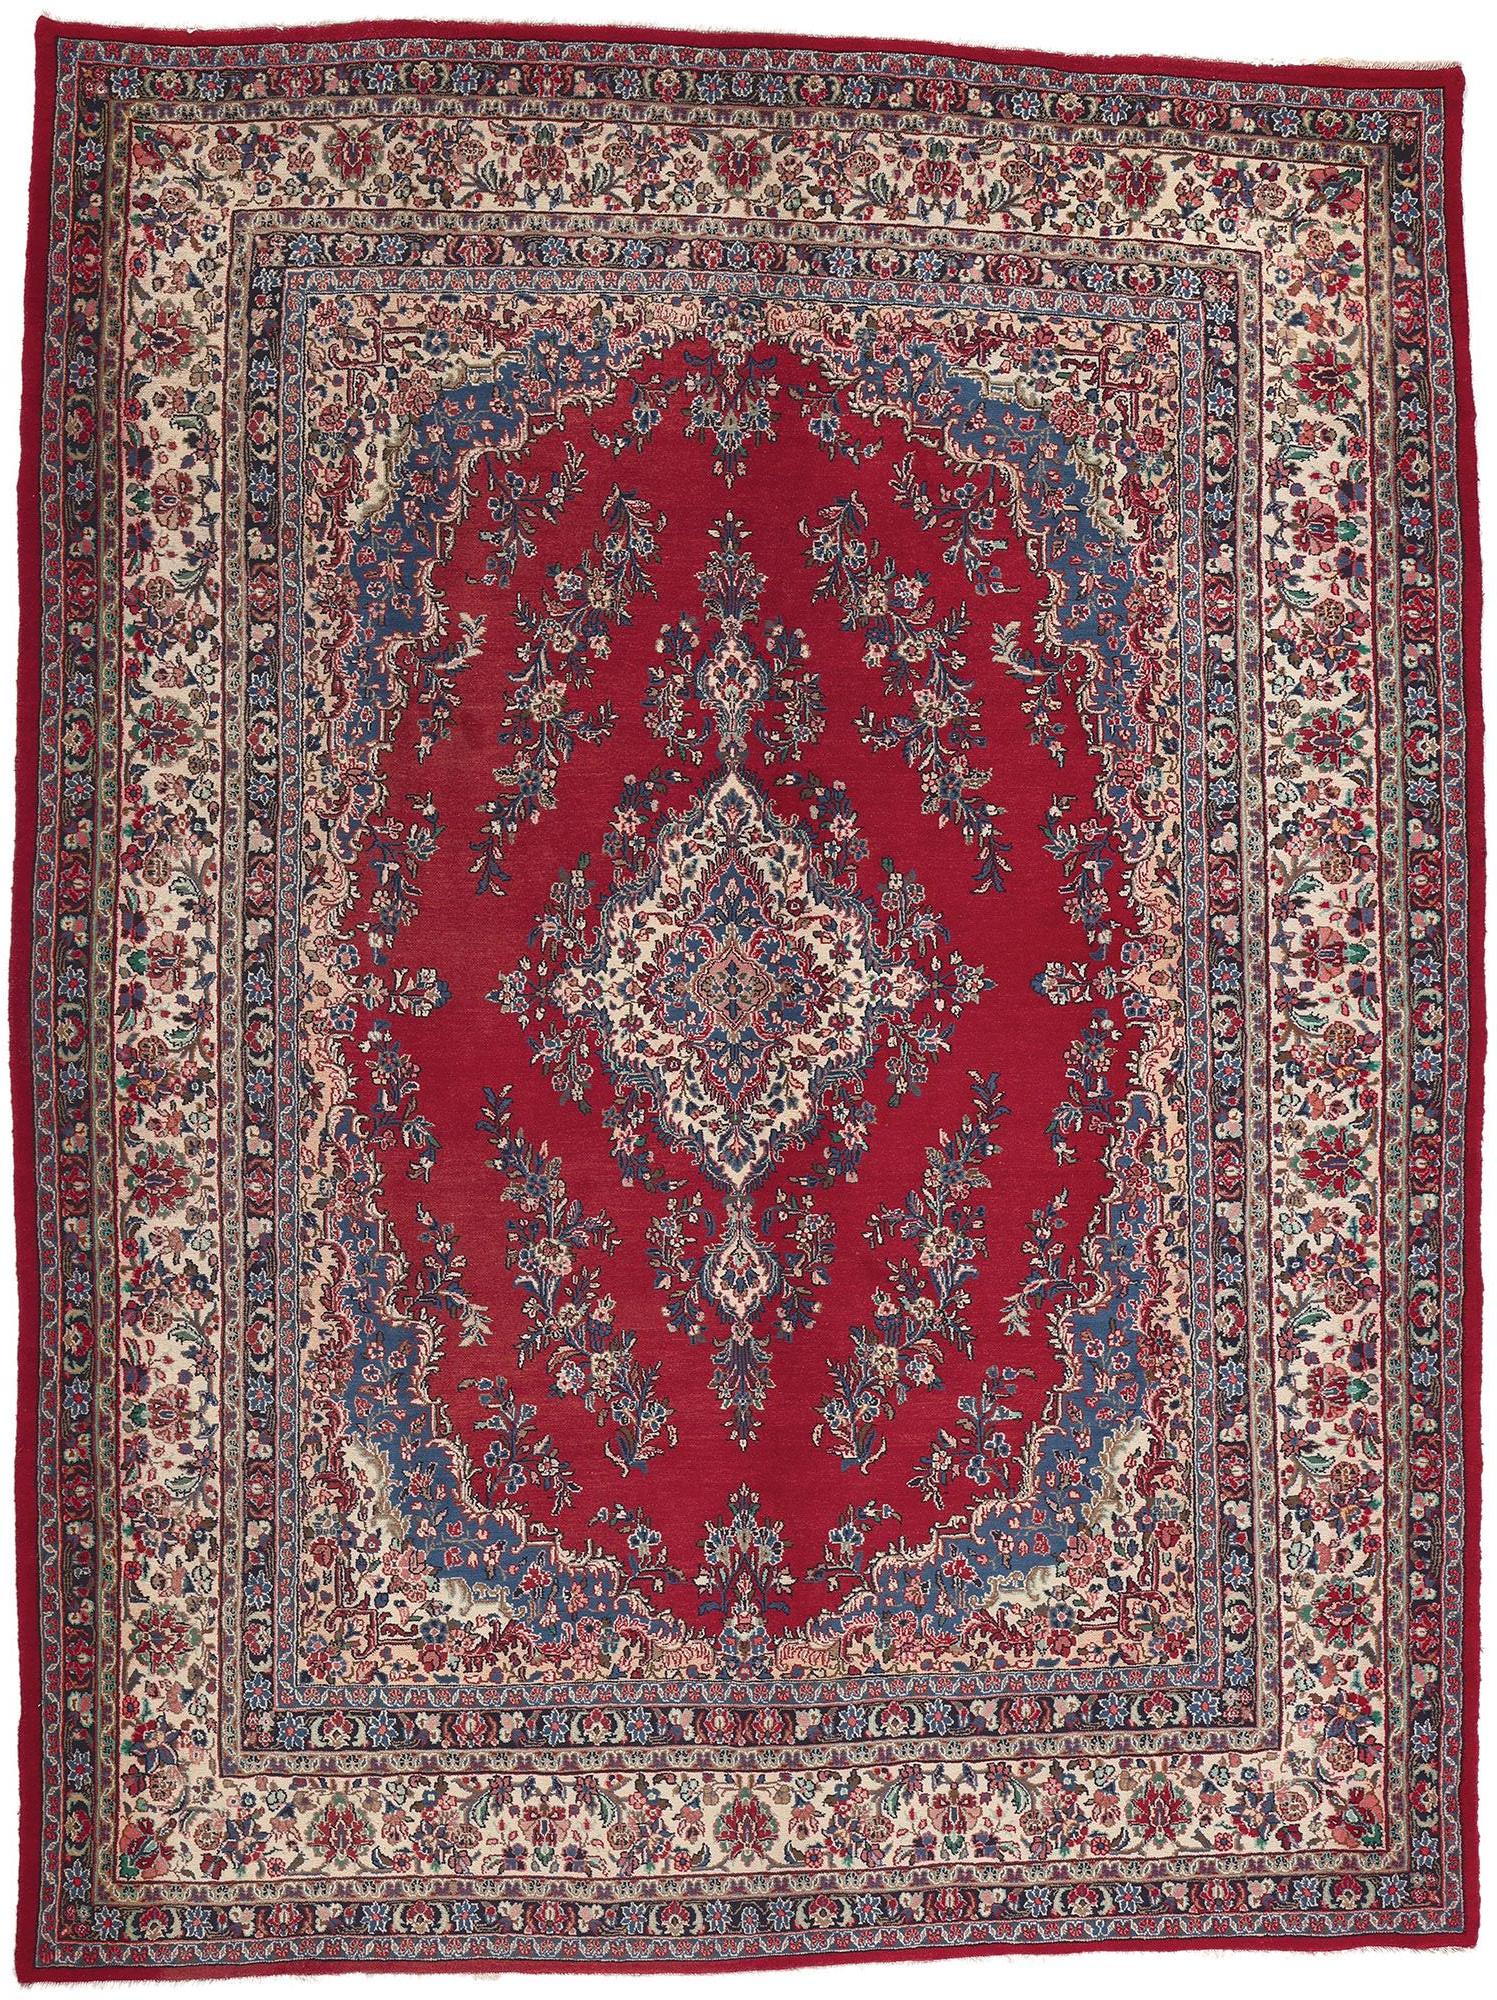 Vintage Persian Hamadan Rug, Stately Decadence Meets Luxurious Jacobean Style